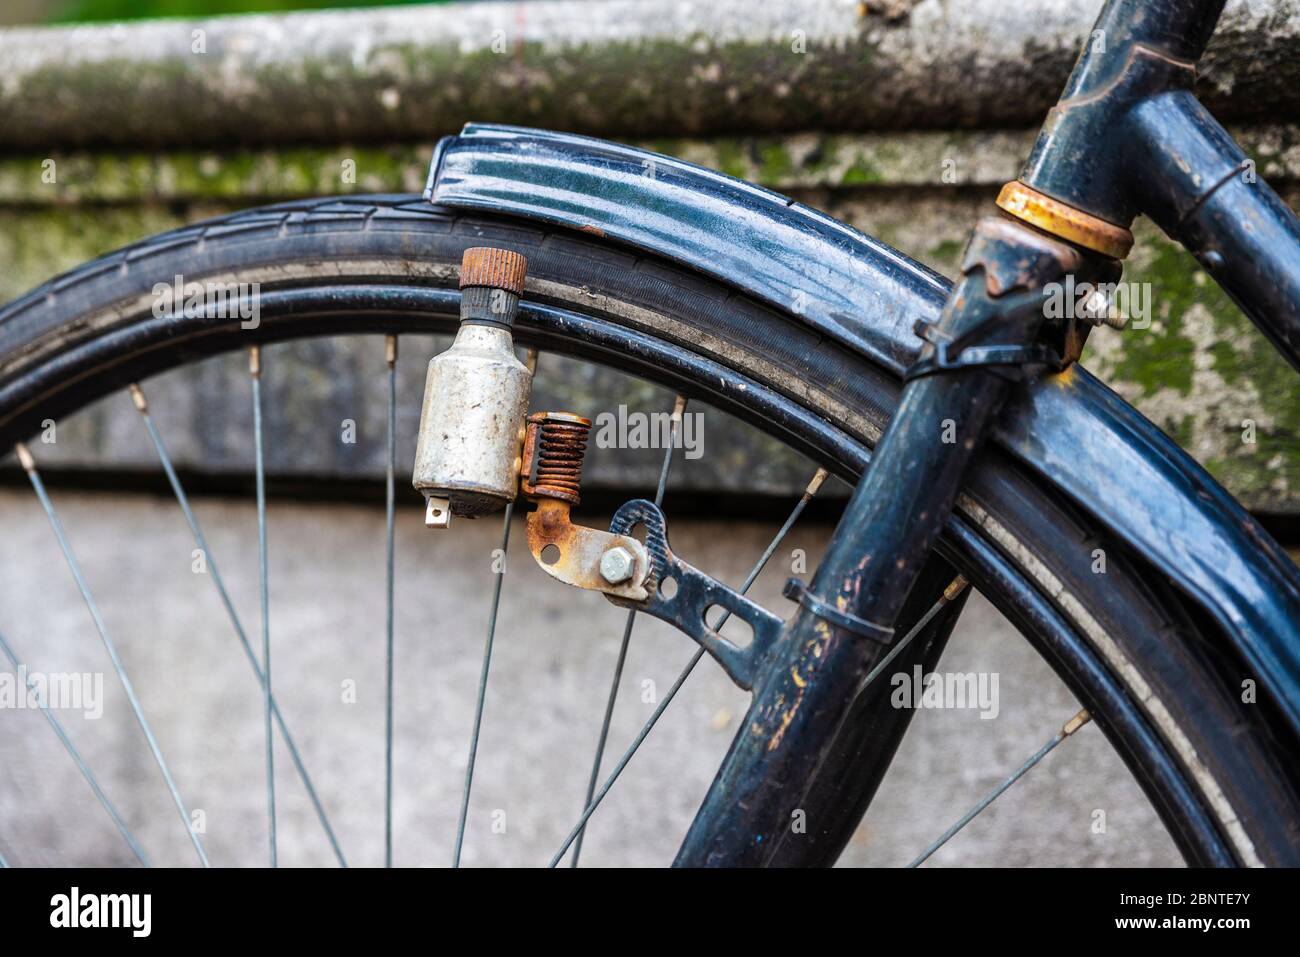 New Classic Bicycle Rear Tail Lamp Light Dynamo Run Mudguard Fit Bike 